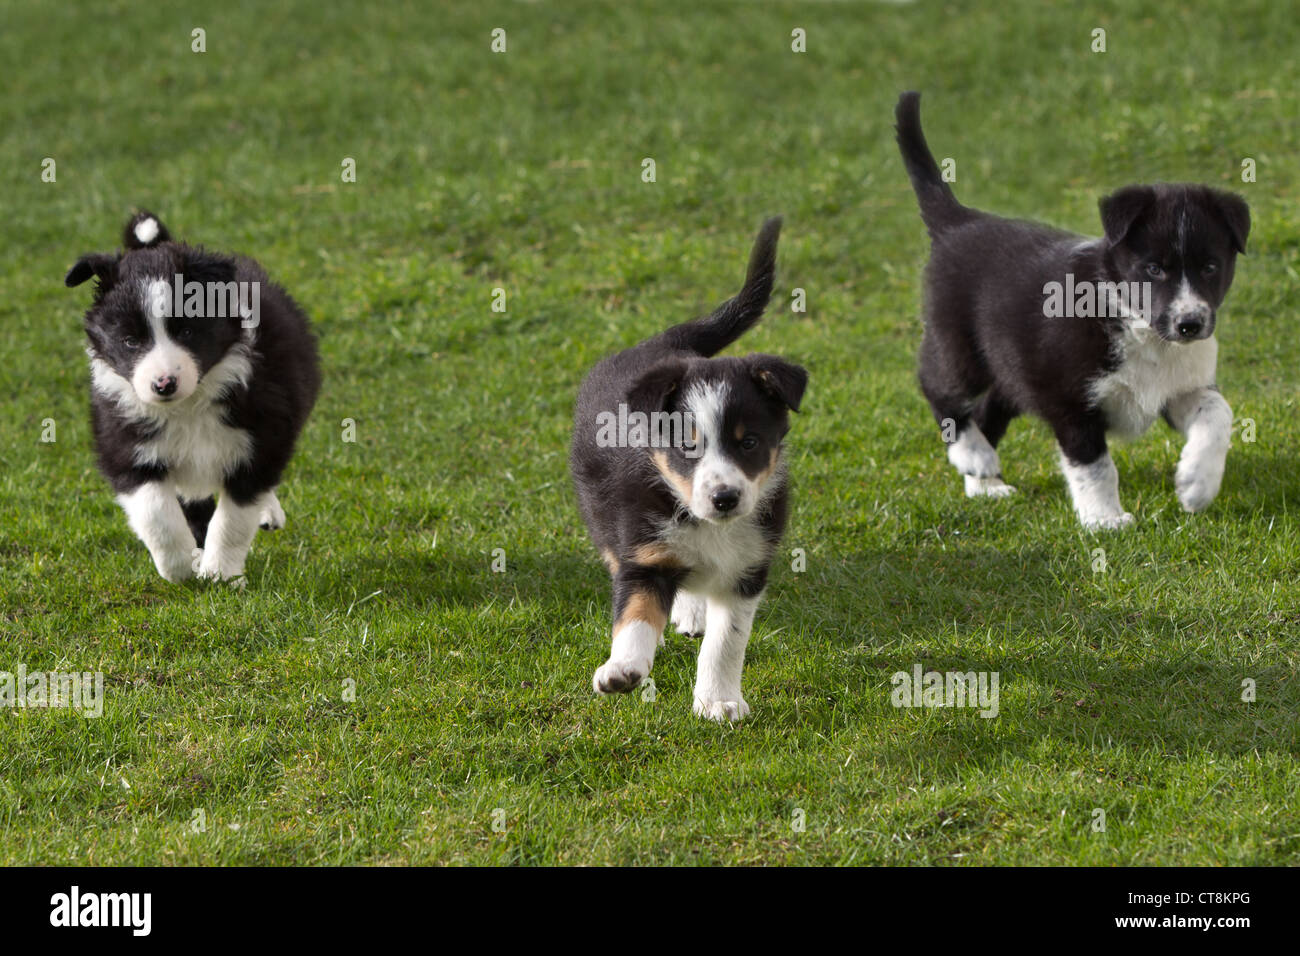 Border collie puppies, black & white puppies Stock Photo